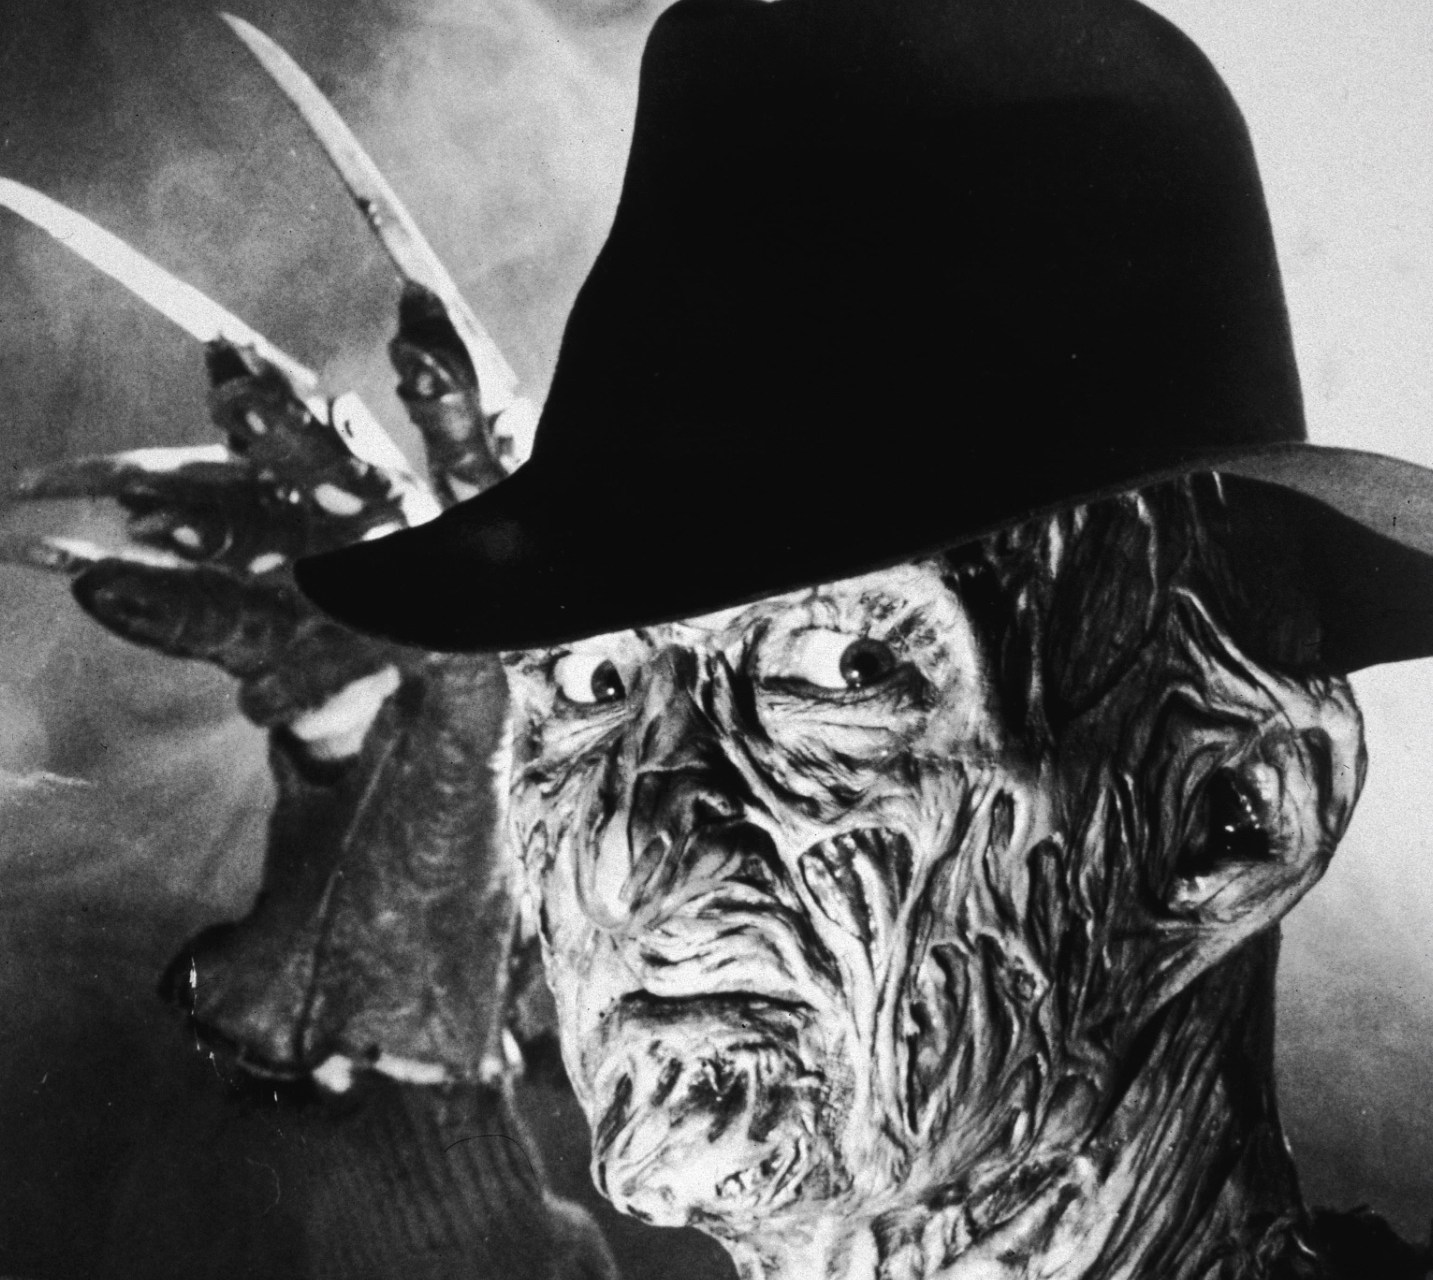 The “True Story” Behind A Nightmare of Elm Street…